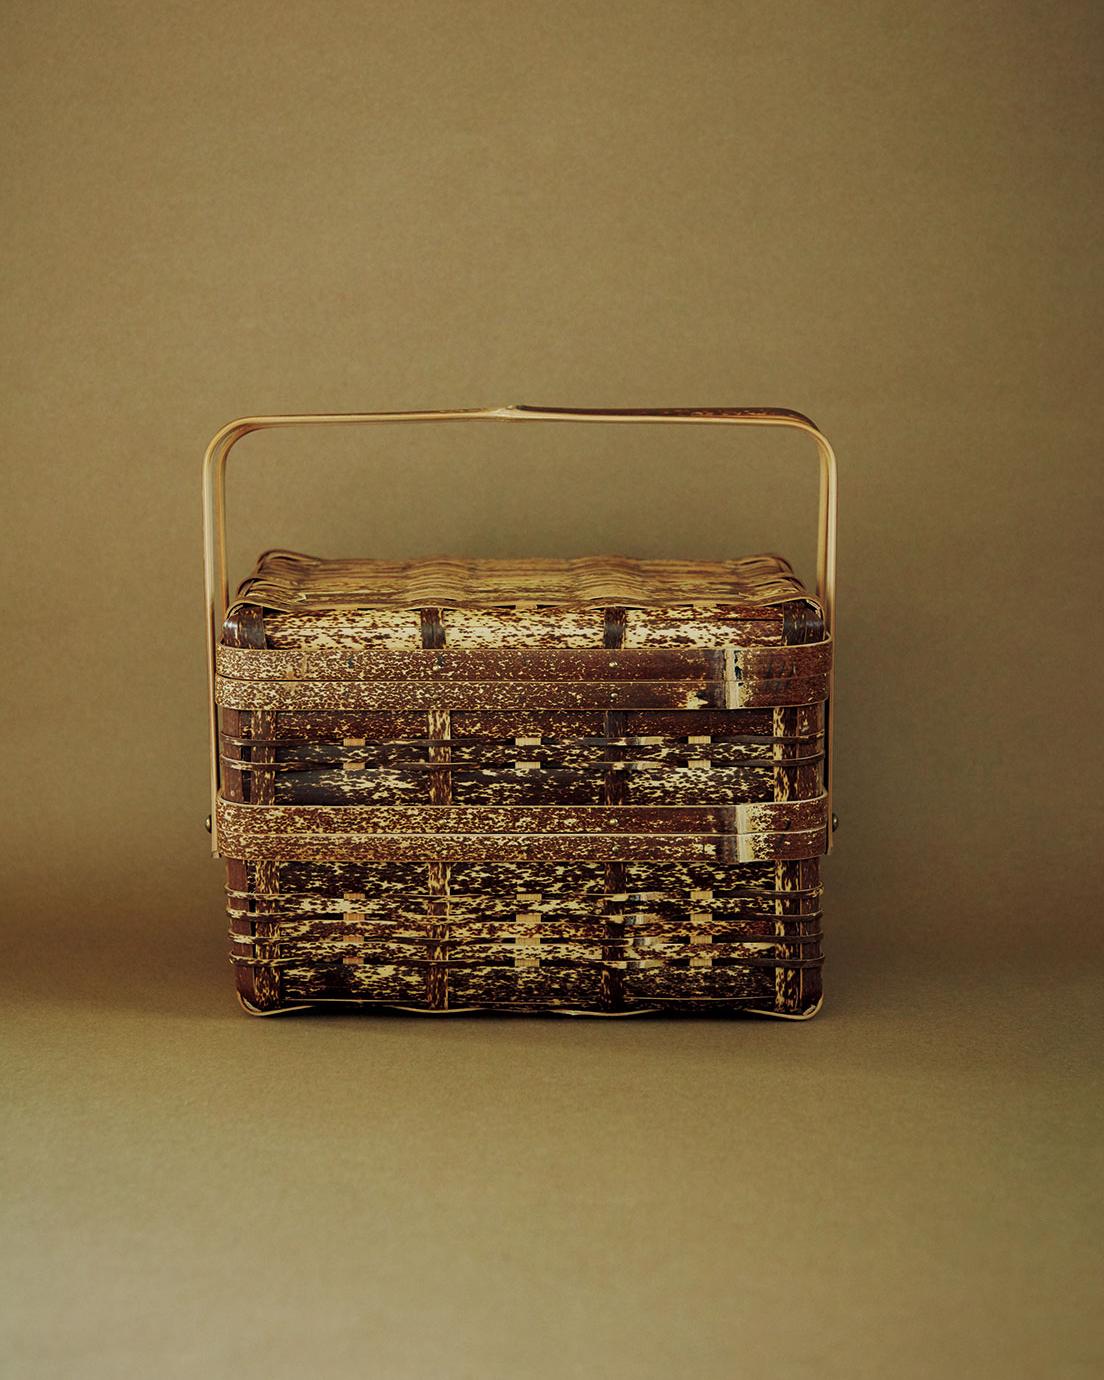 Purchase No. 42 [Torafudake Basket ] Tosa no Sato — a basket woven of tiger bamboo